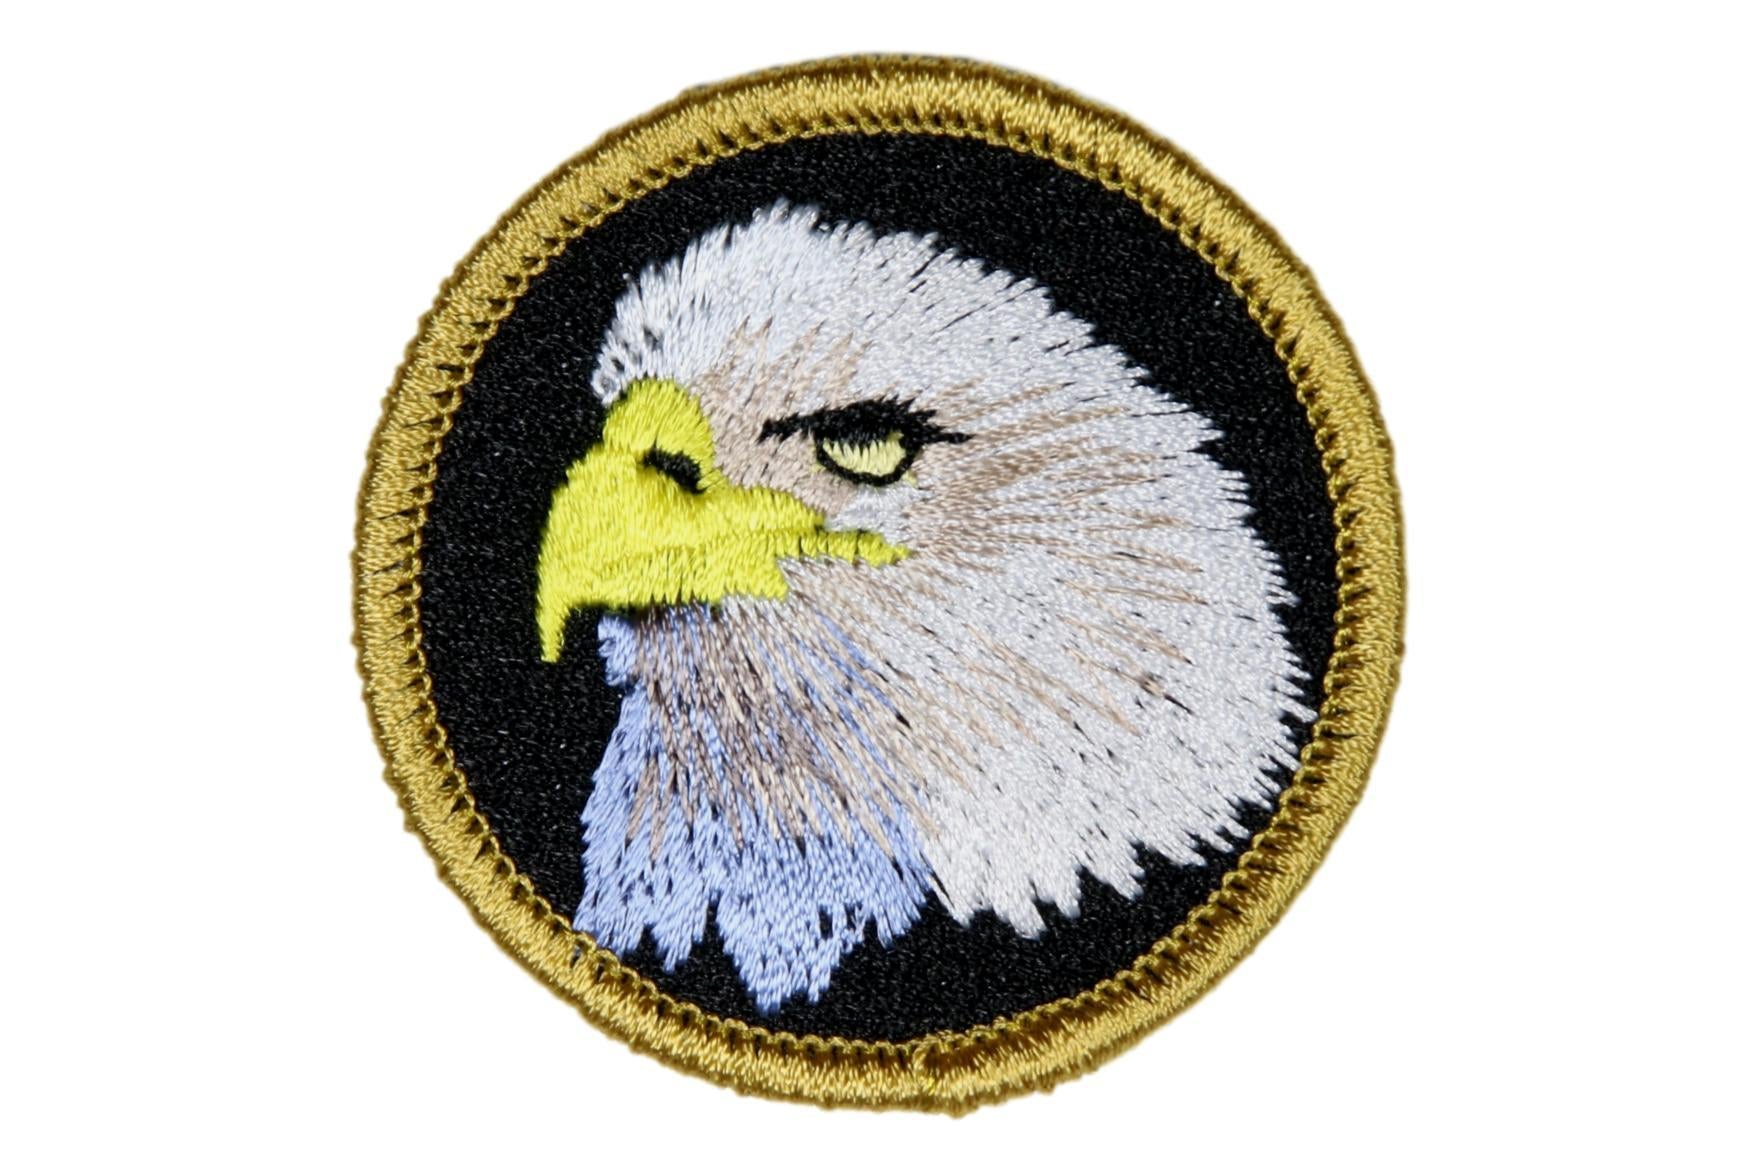 Eagle Patrol Patch